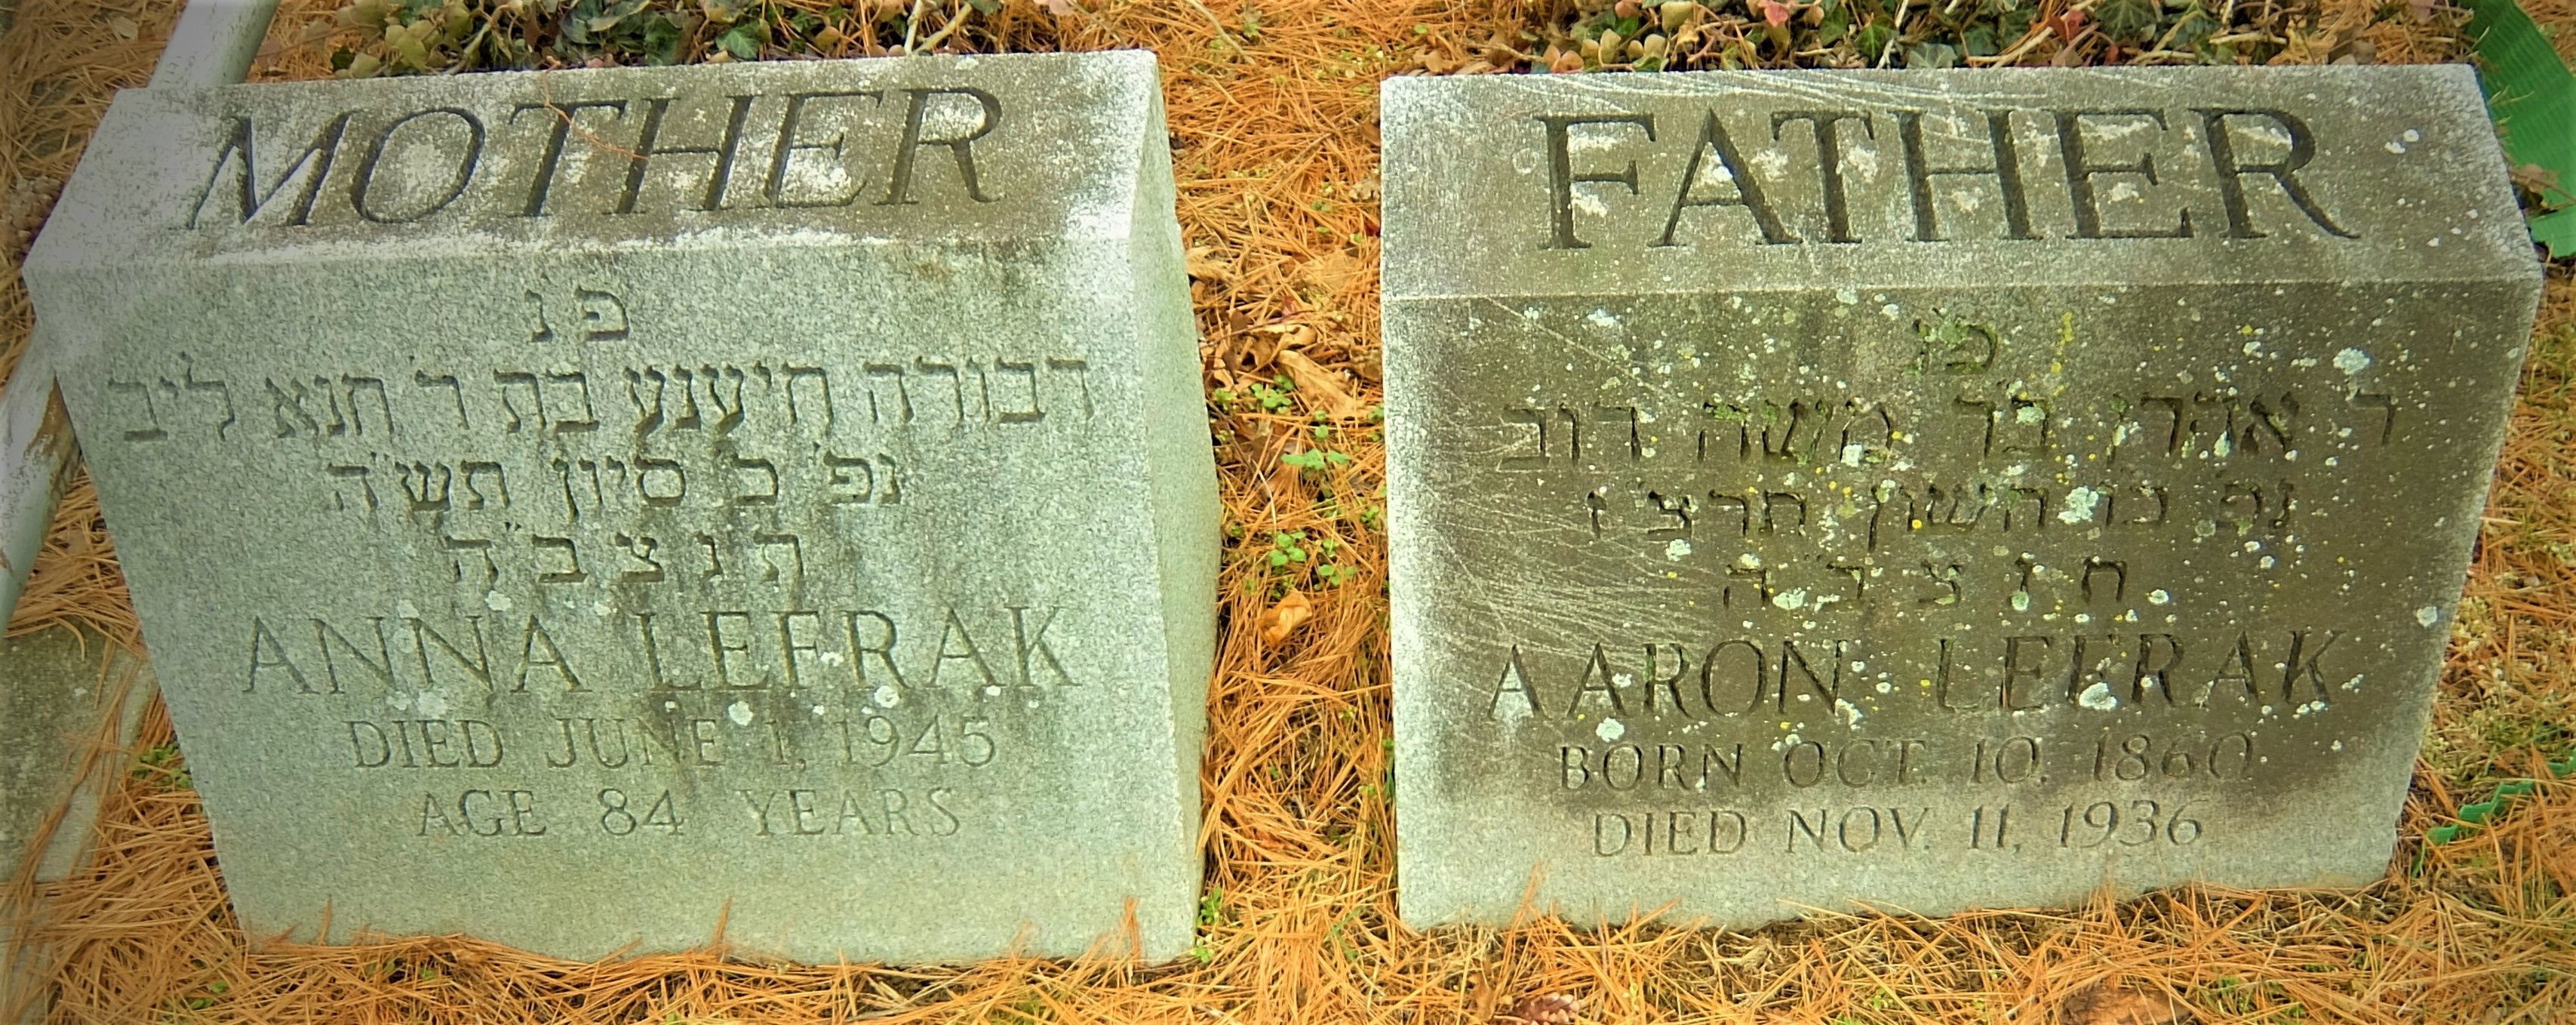 Aaron and Anna Lefrak Headstone 